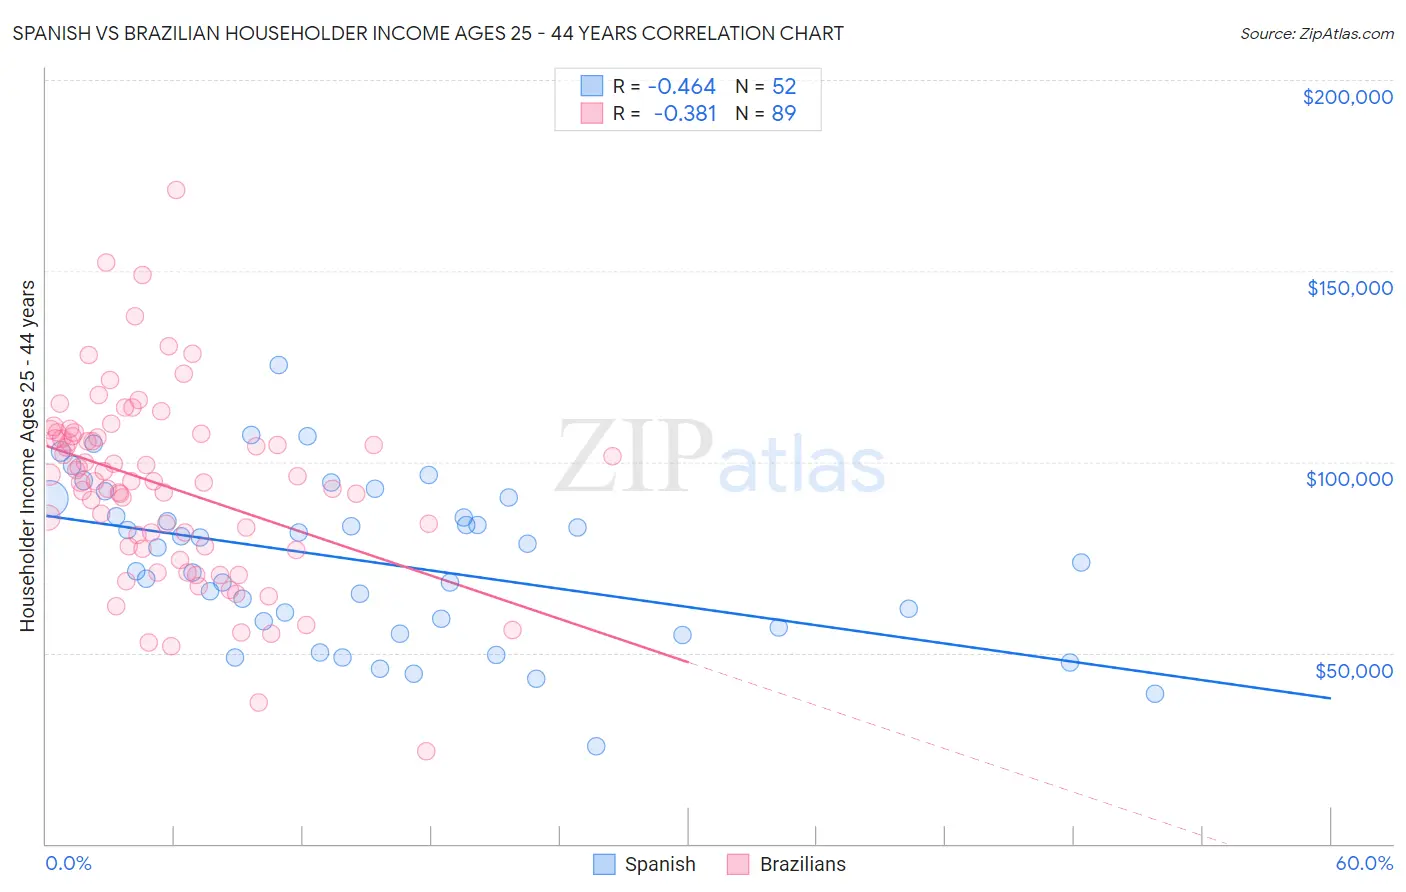 Spanish vs Brazilian Householder Income Ages 25 - 44 years